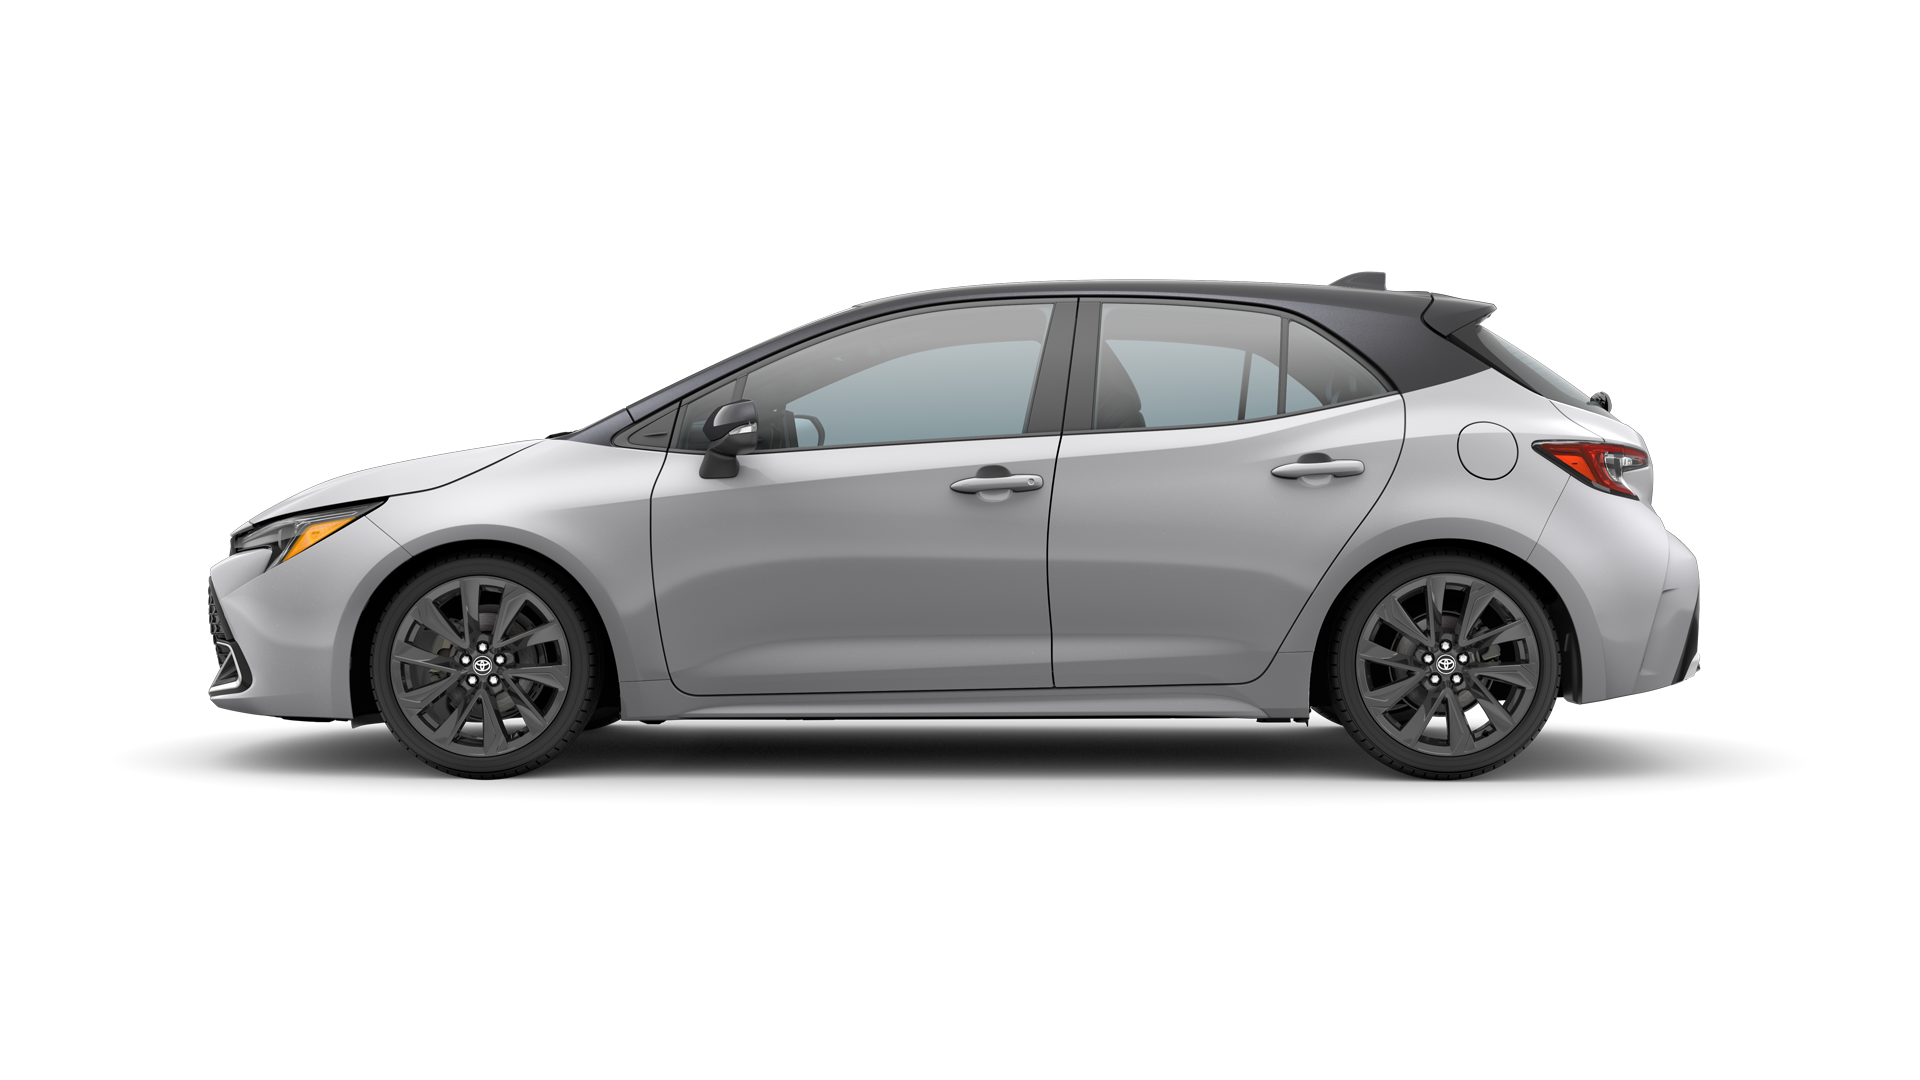 2025 Toyota Hatchback in Classic Silver Metallic/Midnight Black Metallic Roof.